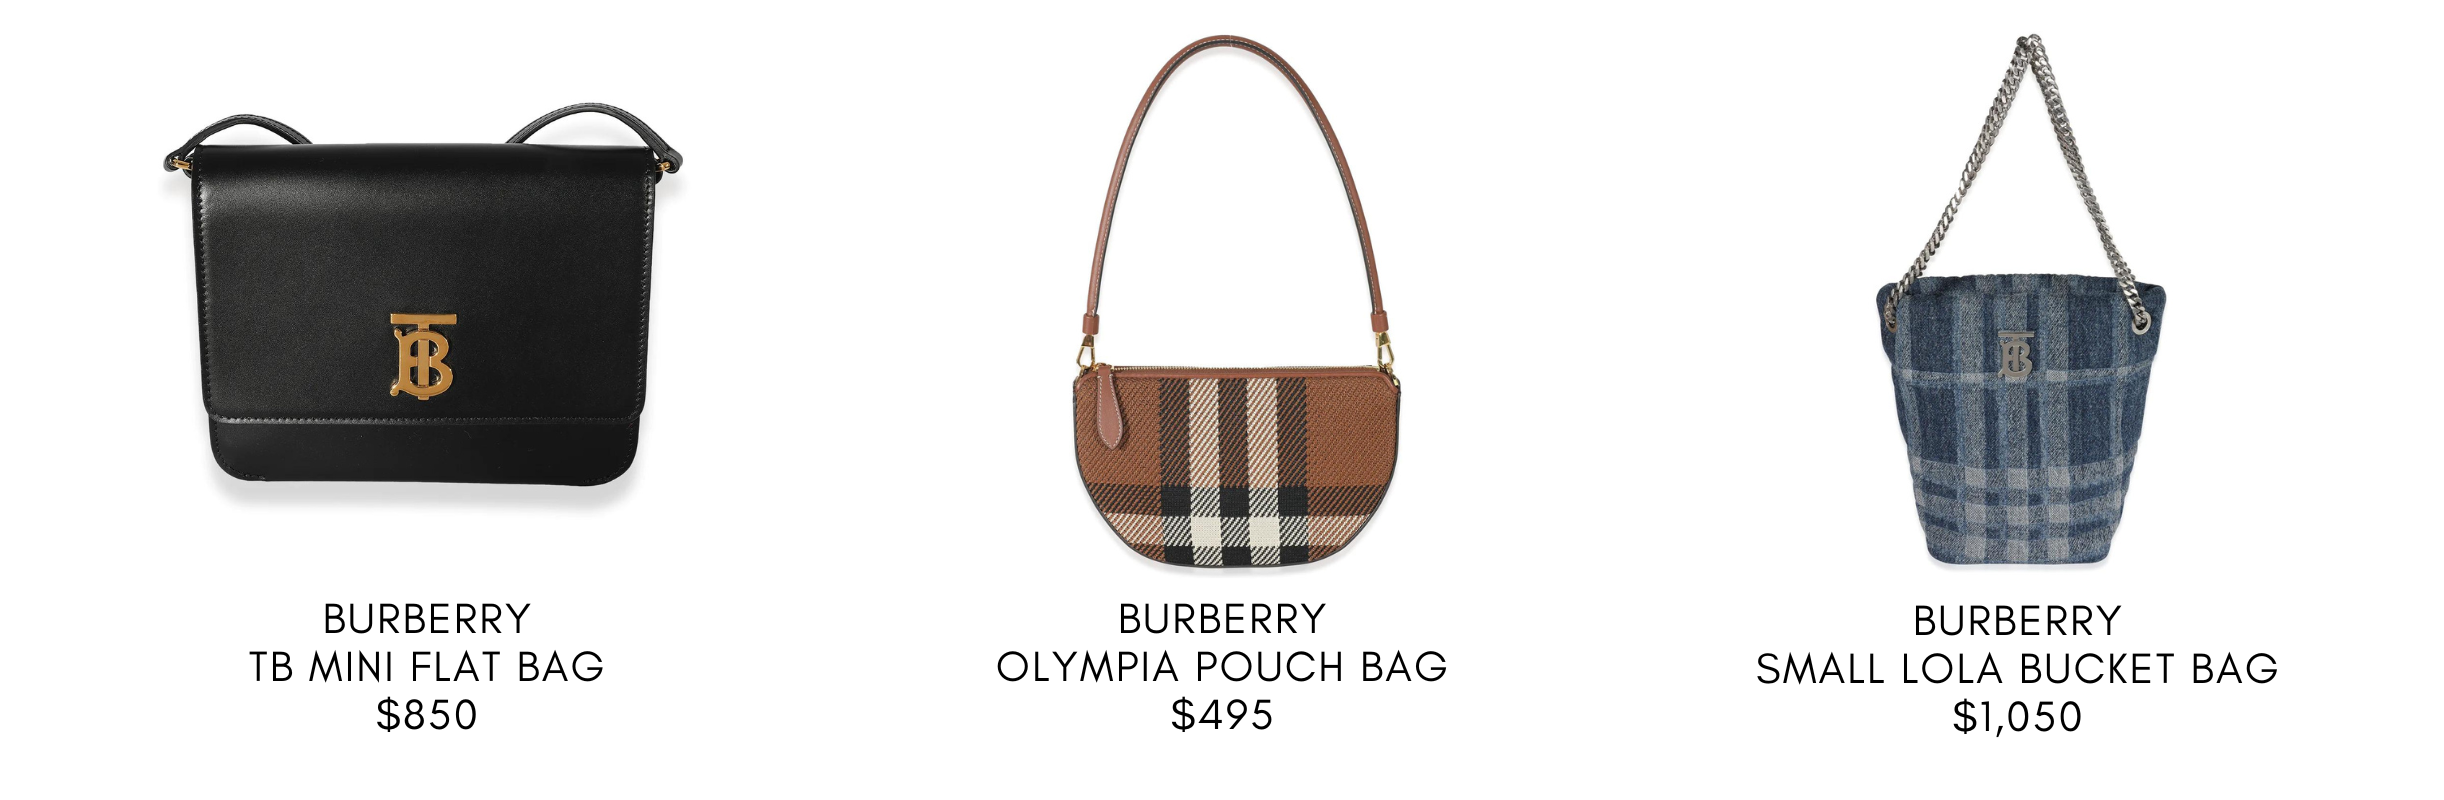 Buy Burberry bag